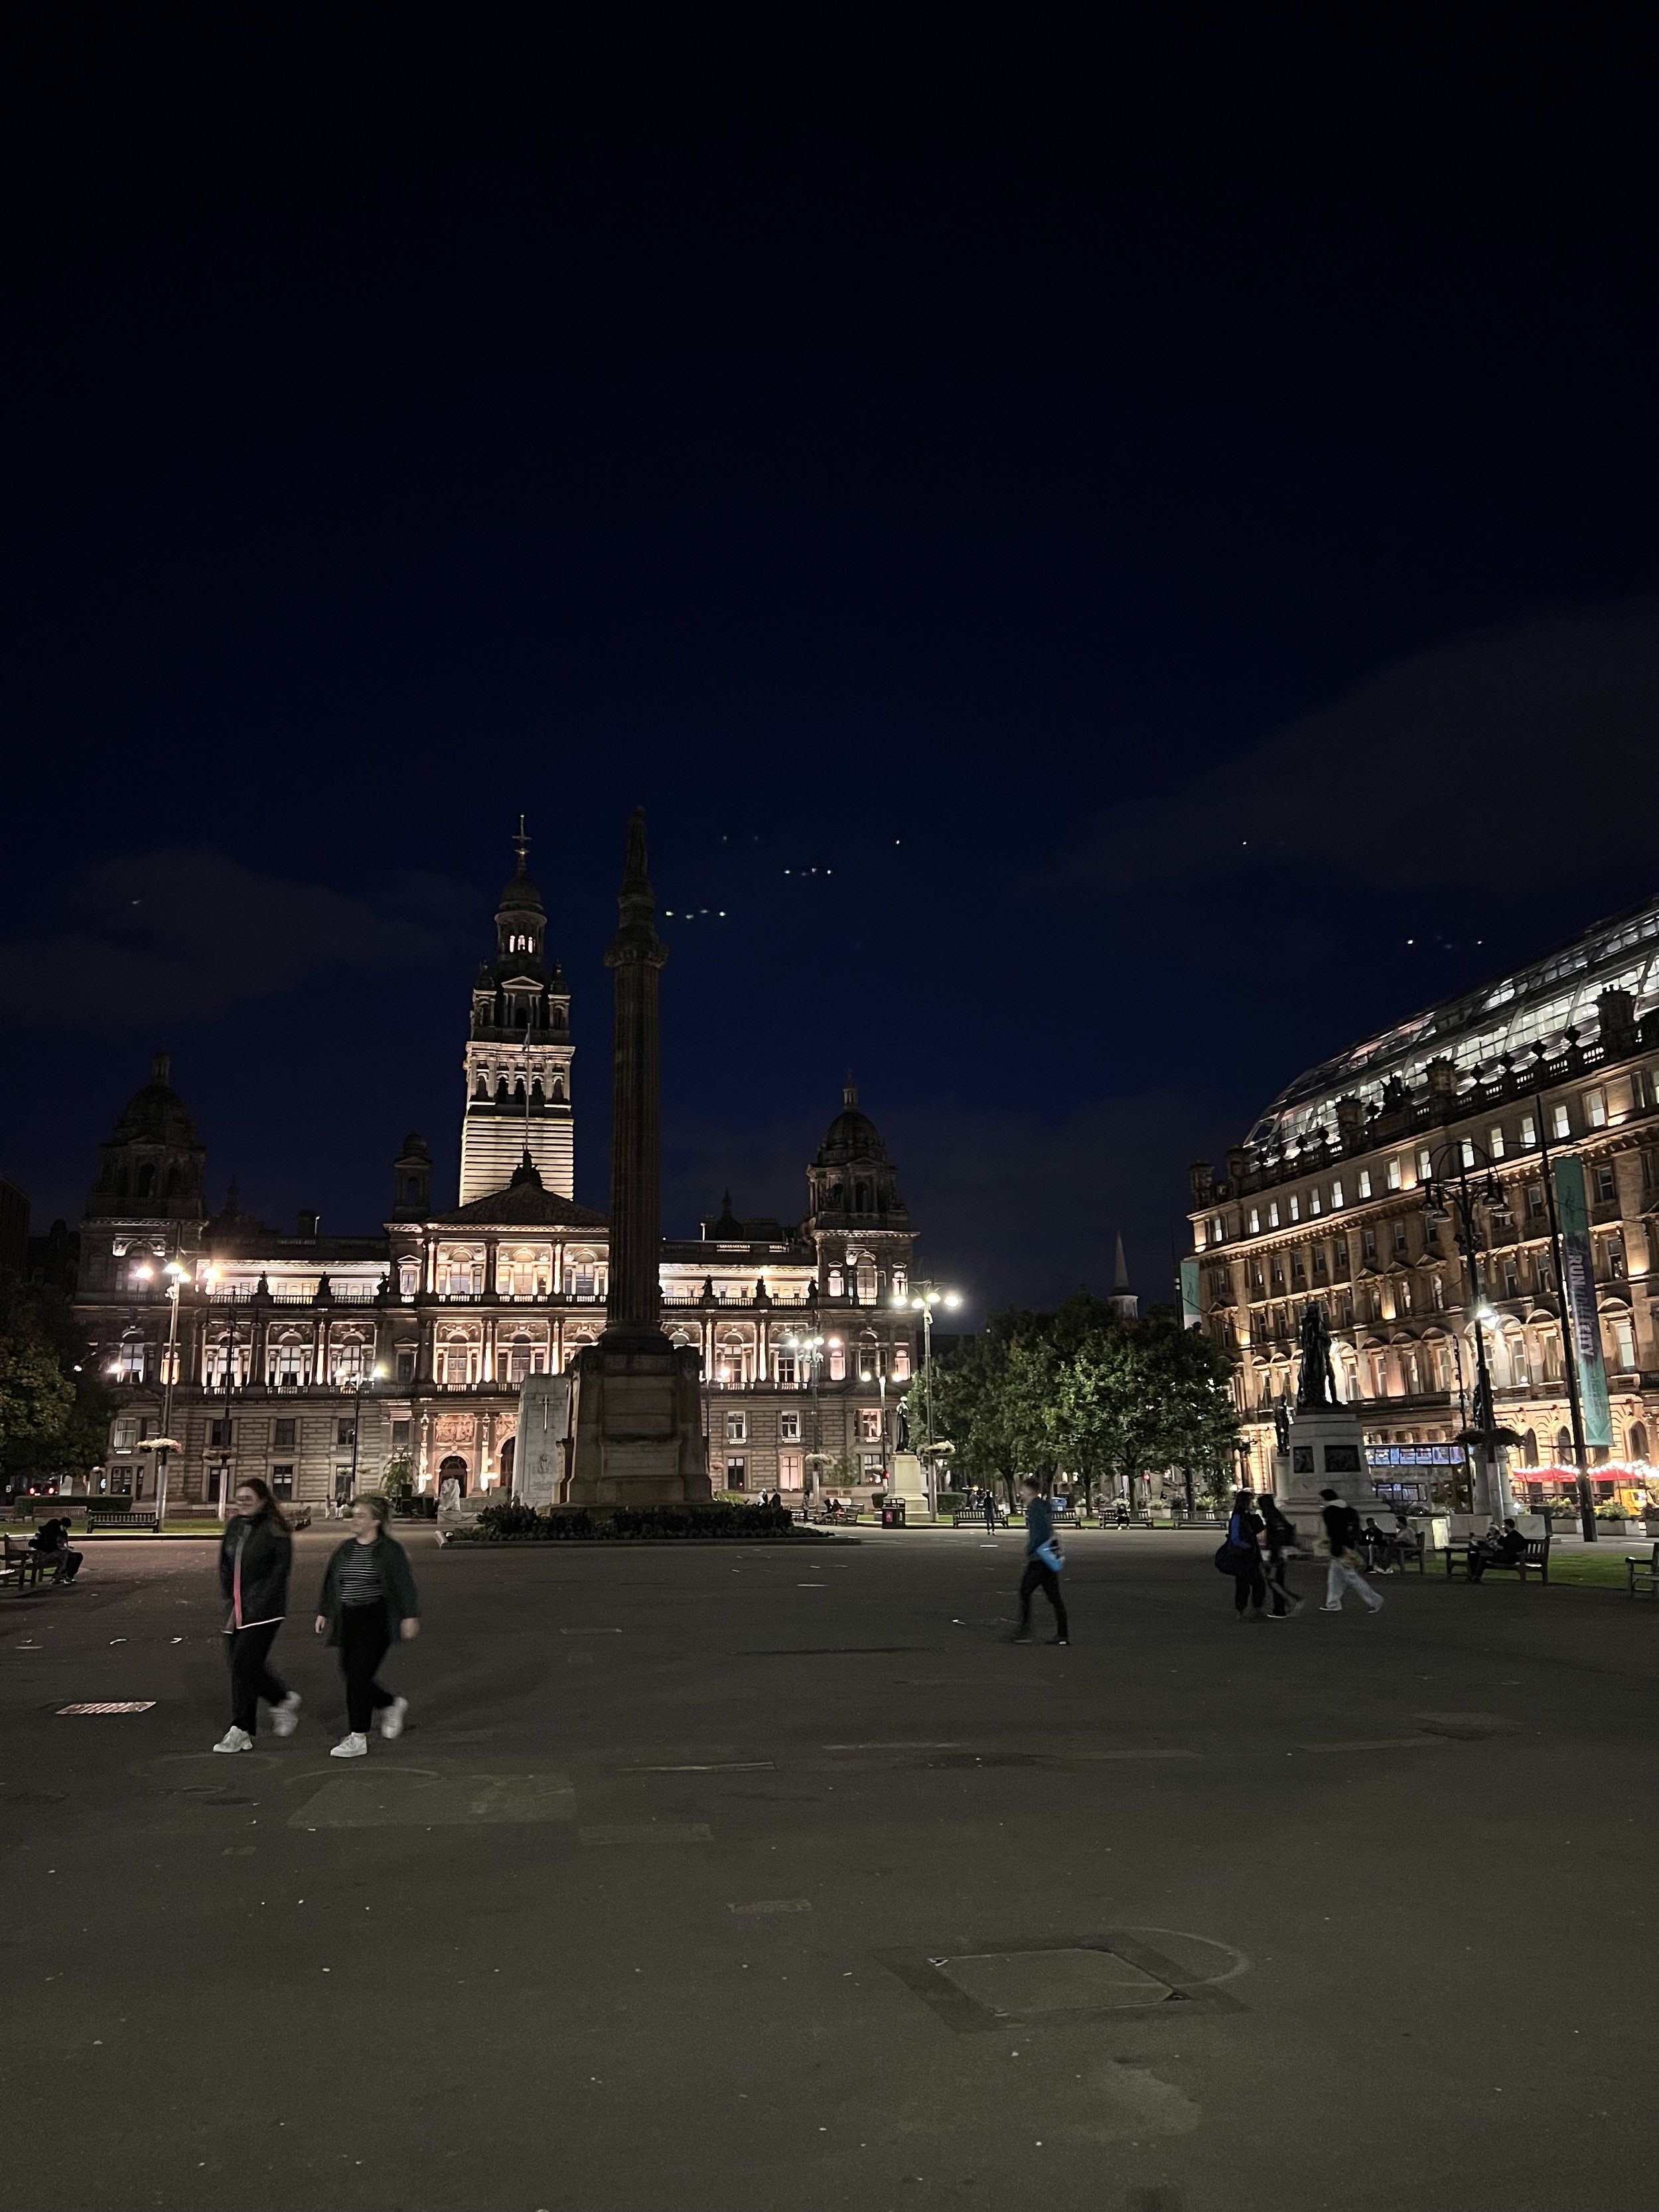 George Square at night, Glasgow